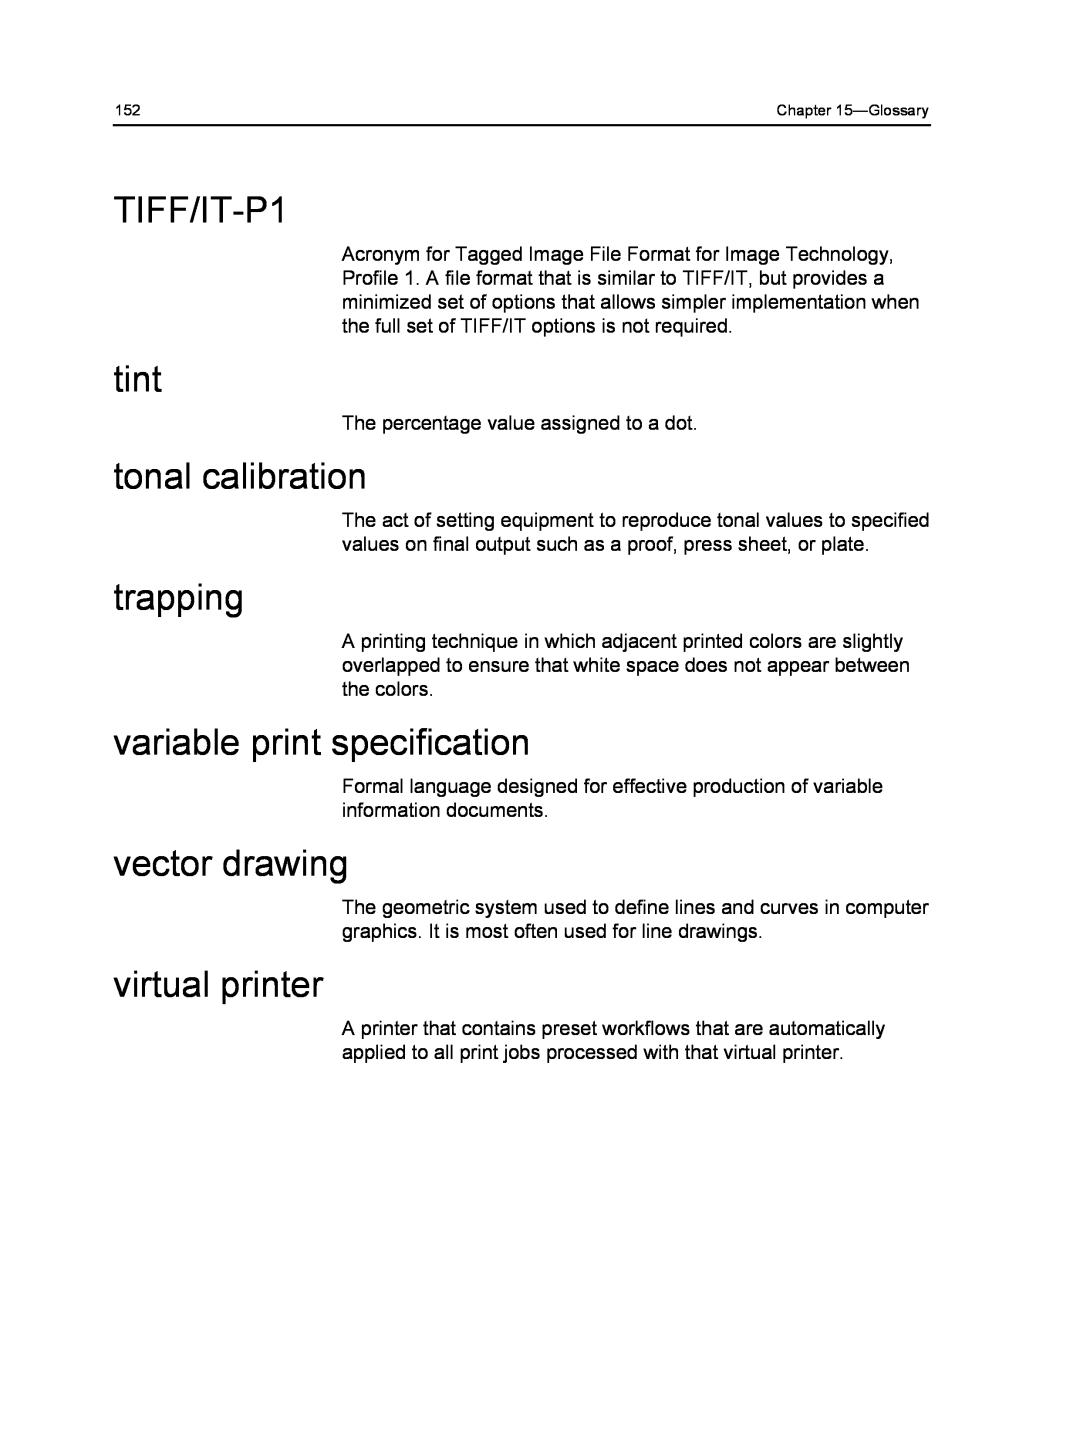 Xerox 560 TIFF/IT-P1, tint, tonal calibration, trapping, variable print specification, vector drawing, virtual printer 